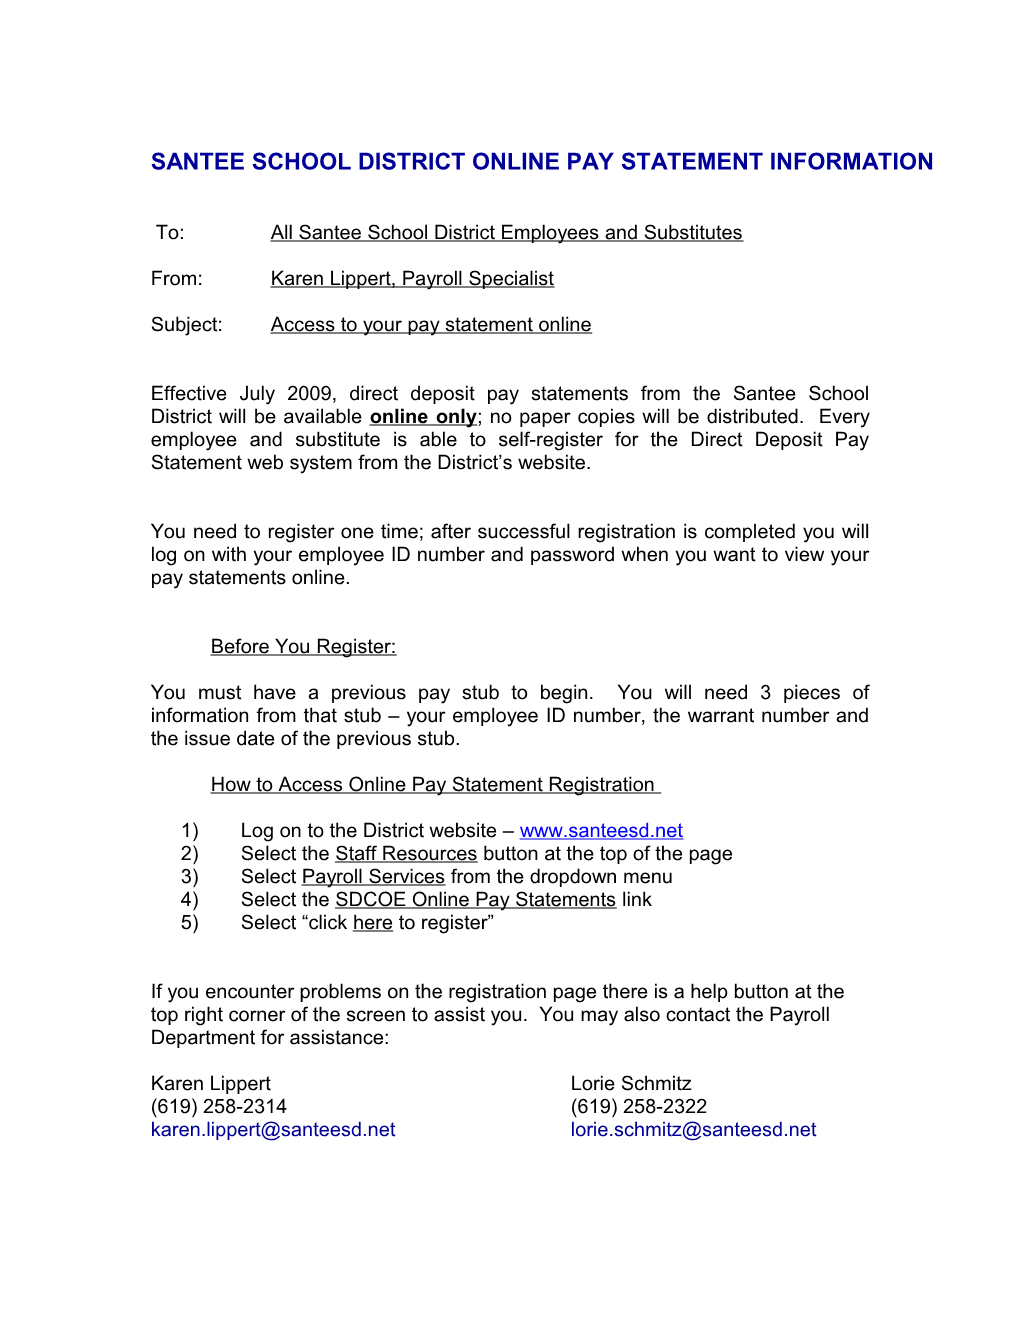 Santee School District Online Pay Stub Information